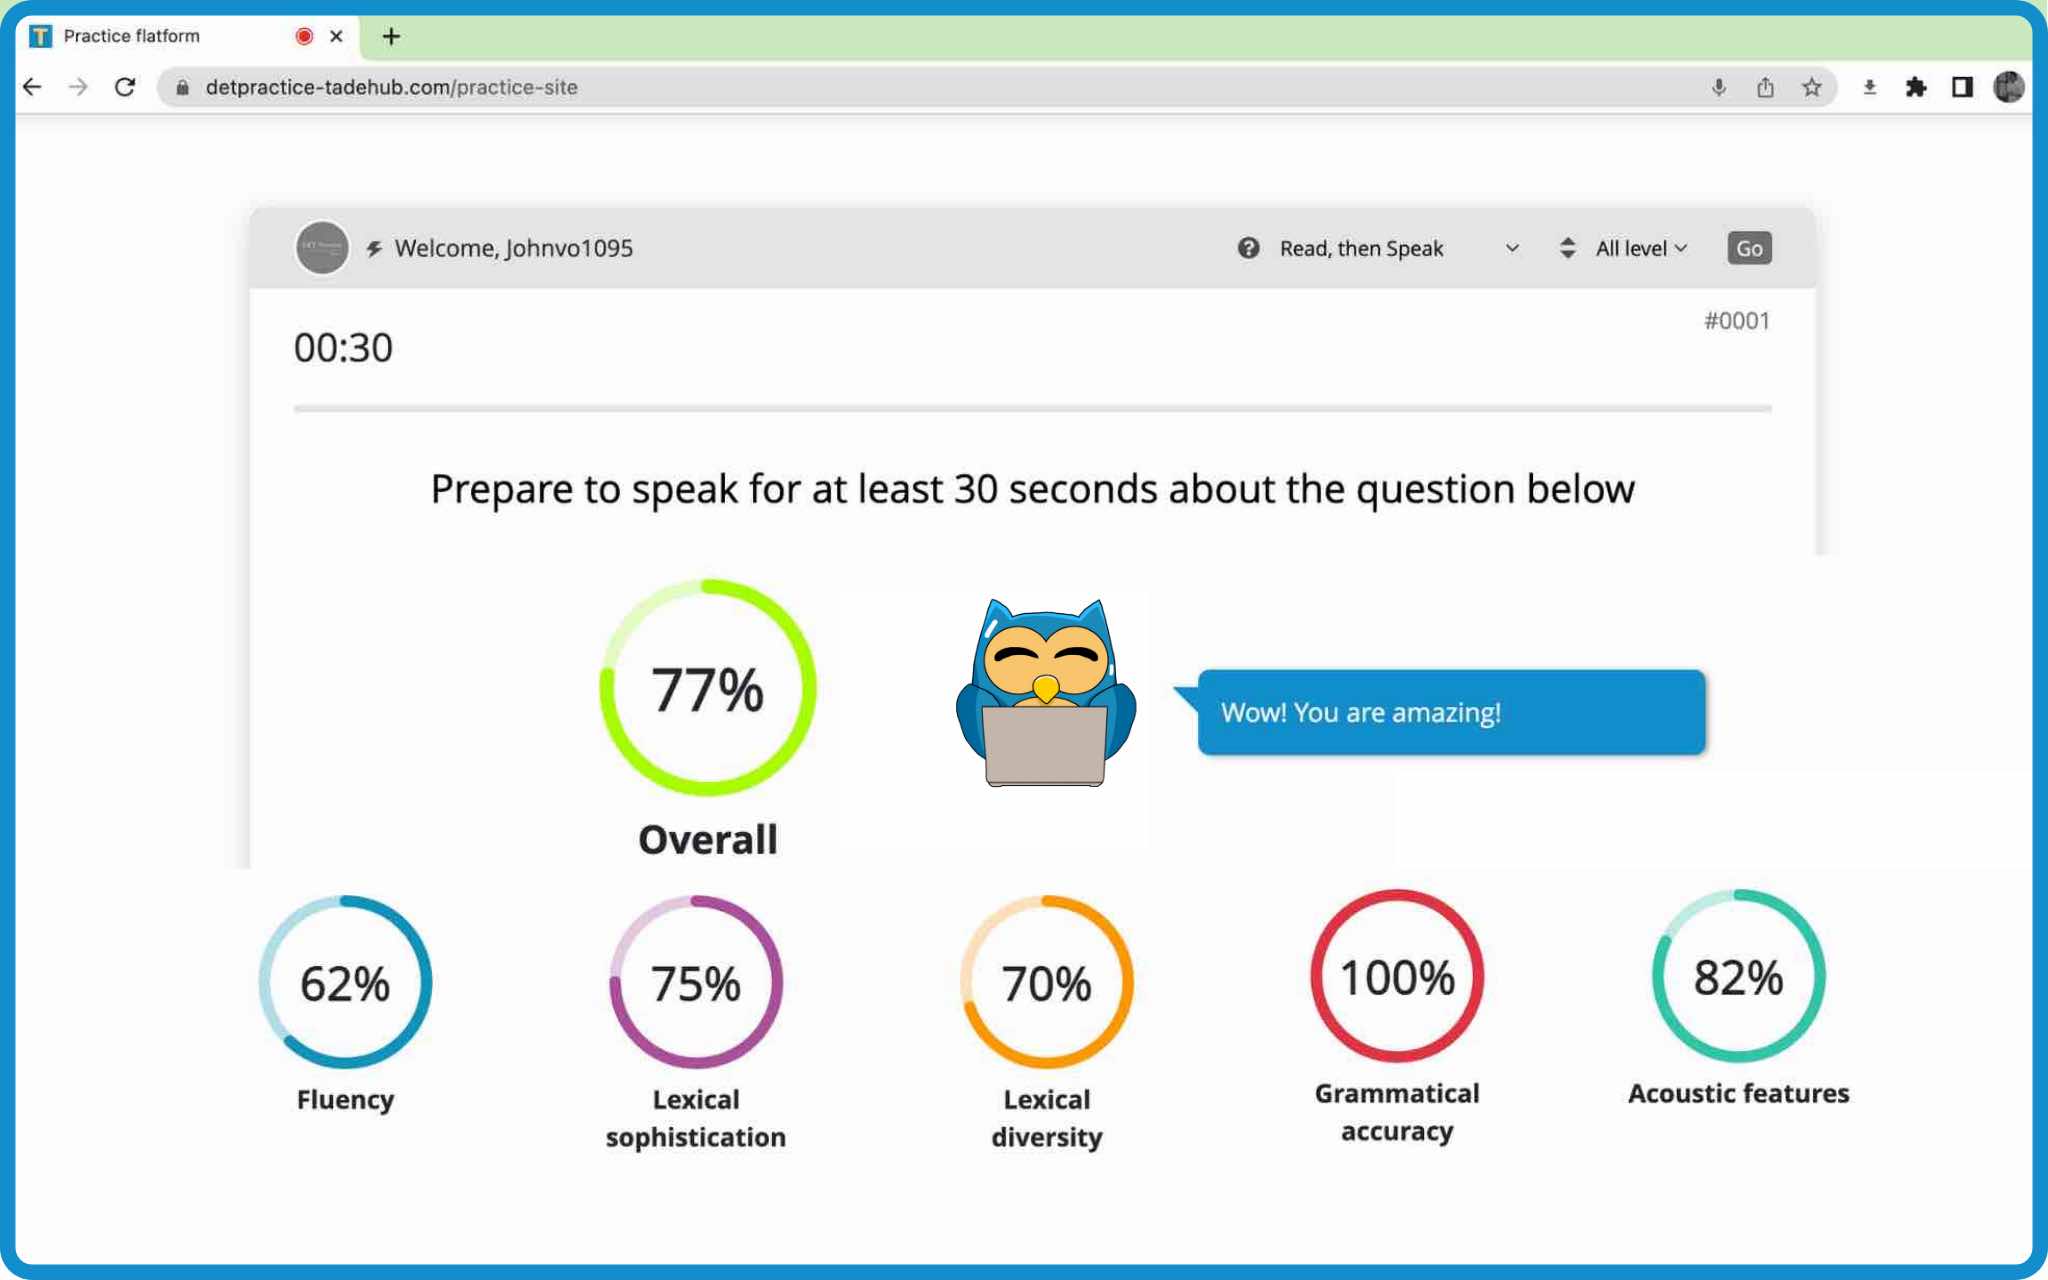 automatic-feedback-duolingo-test, det practice platform, Duolingo Test preparation, instant duolingo feedback